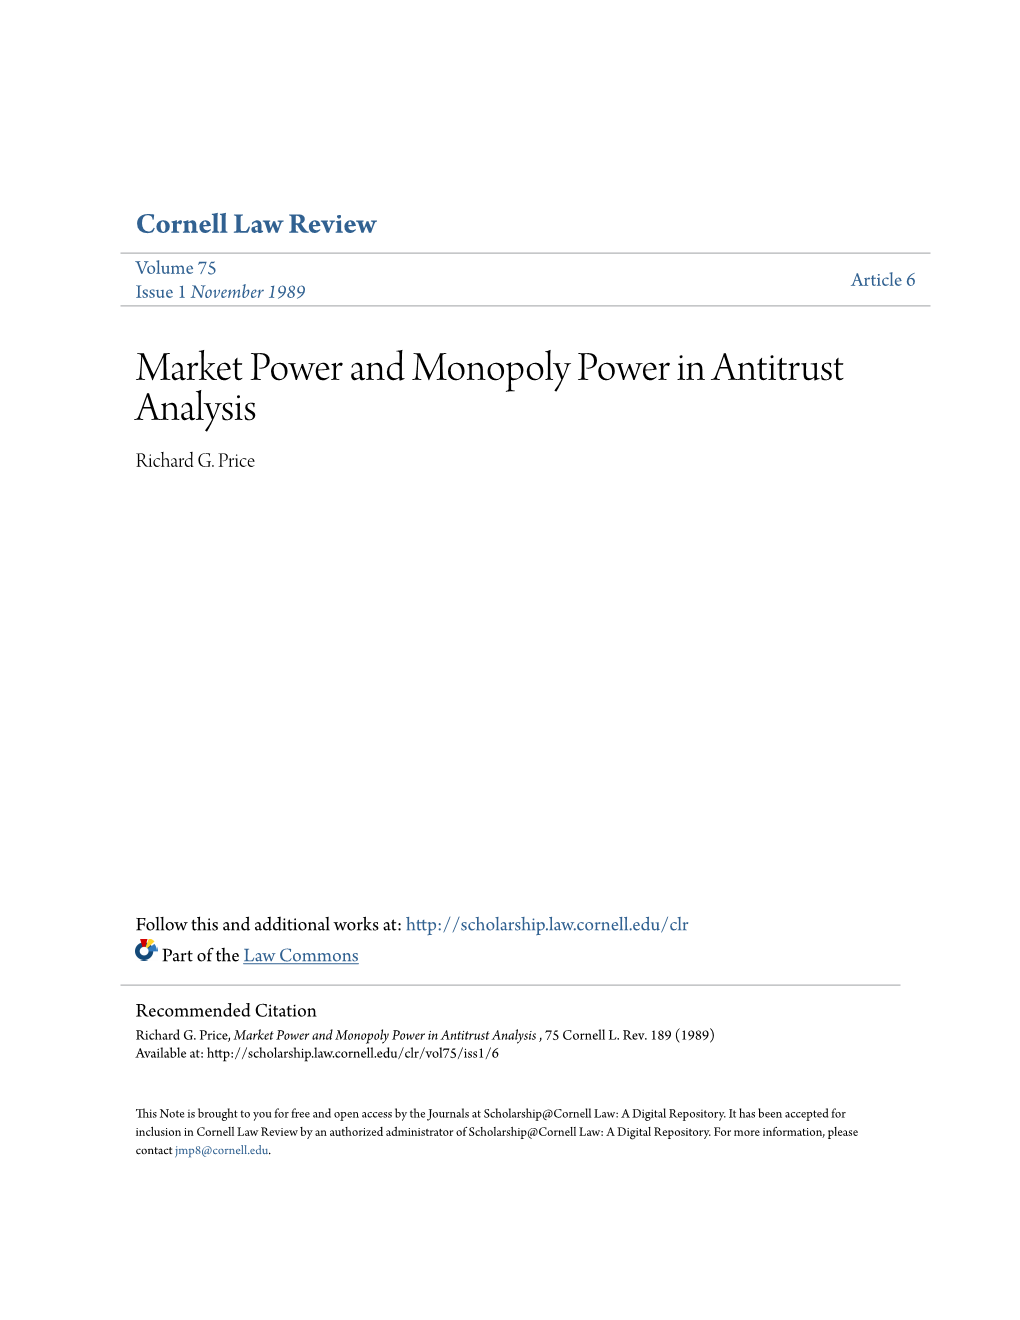 Market Power and Monopoly Power in Antitrust Analysis Richard G